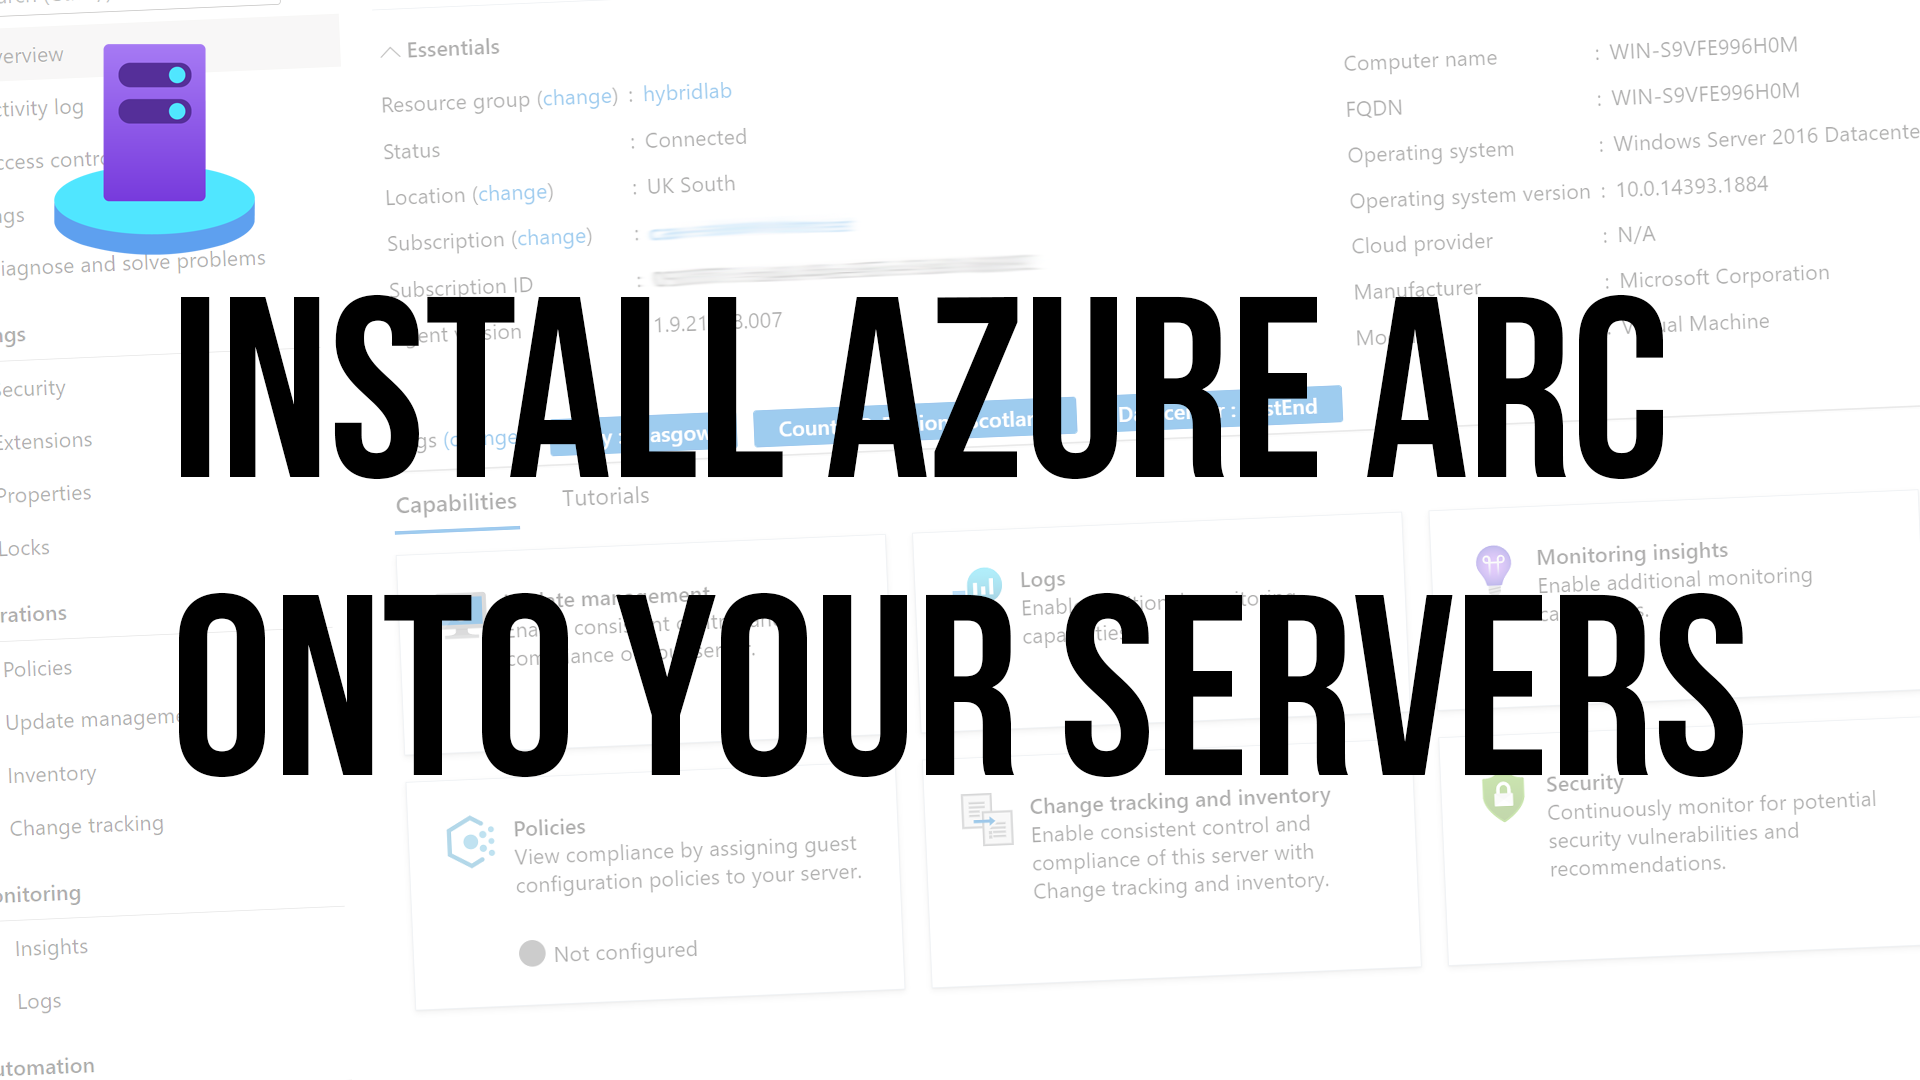 Install Azure Arc onto your servers